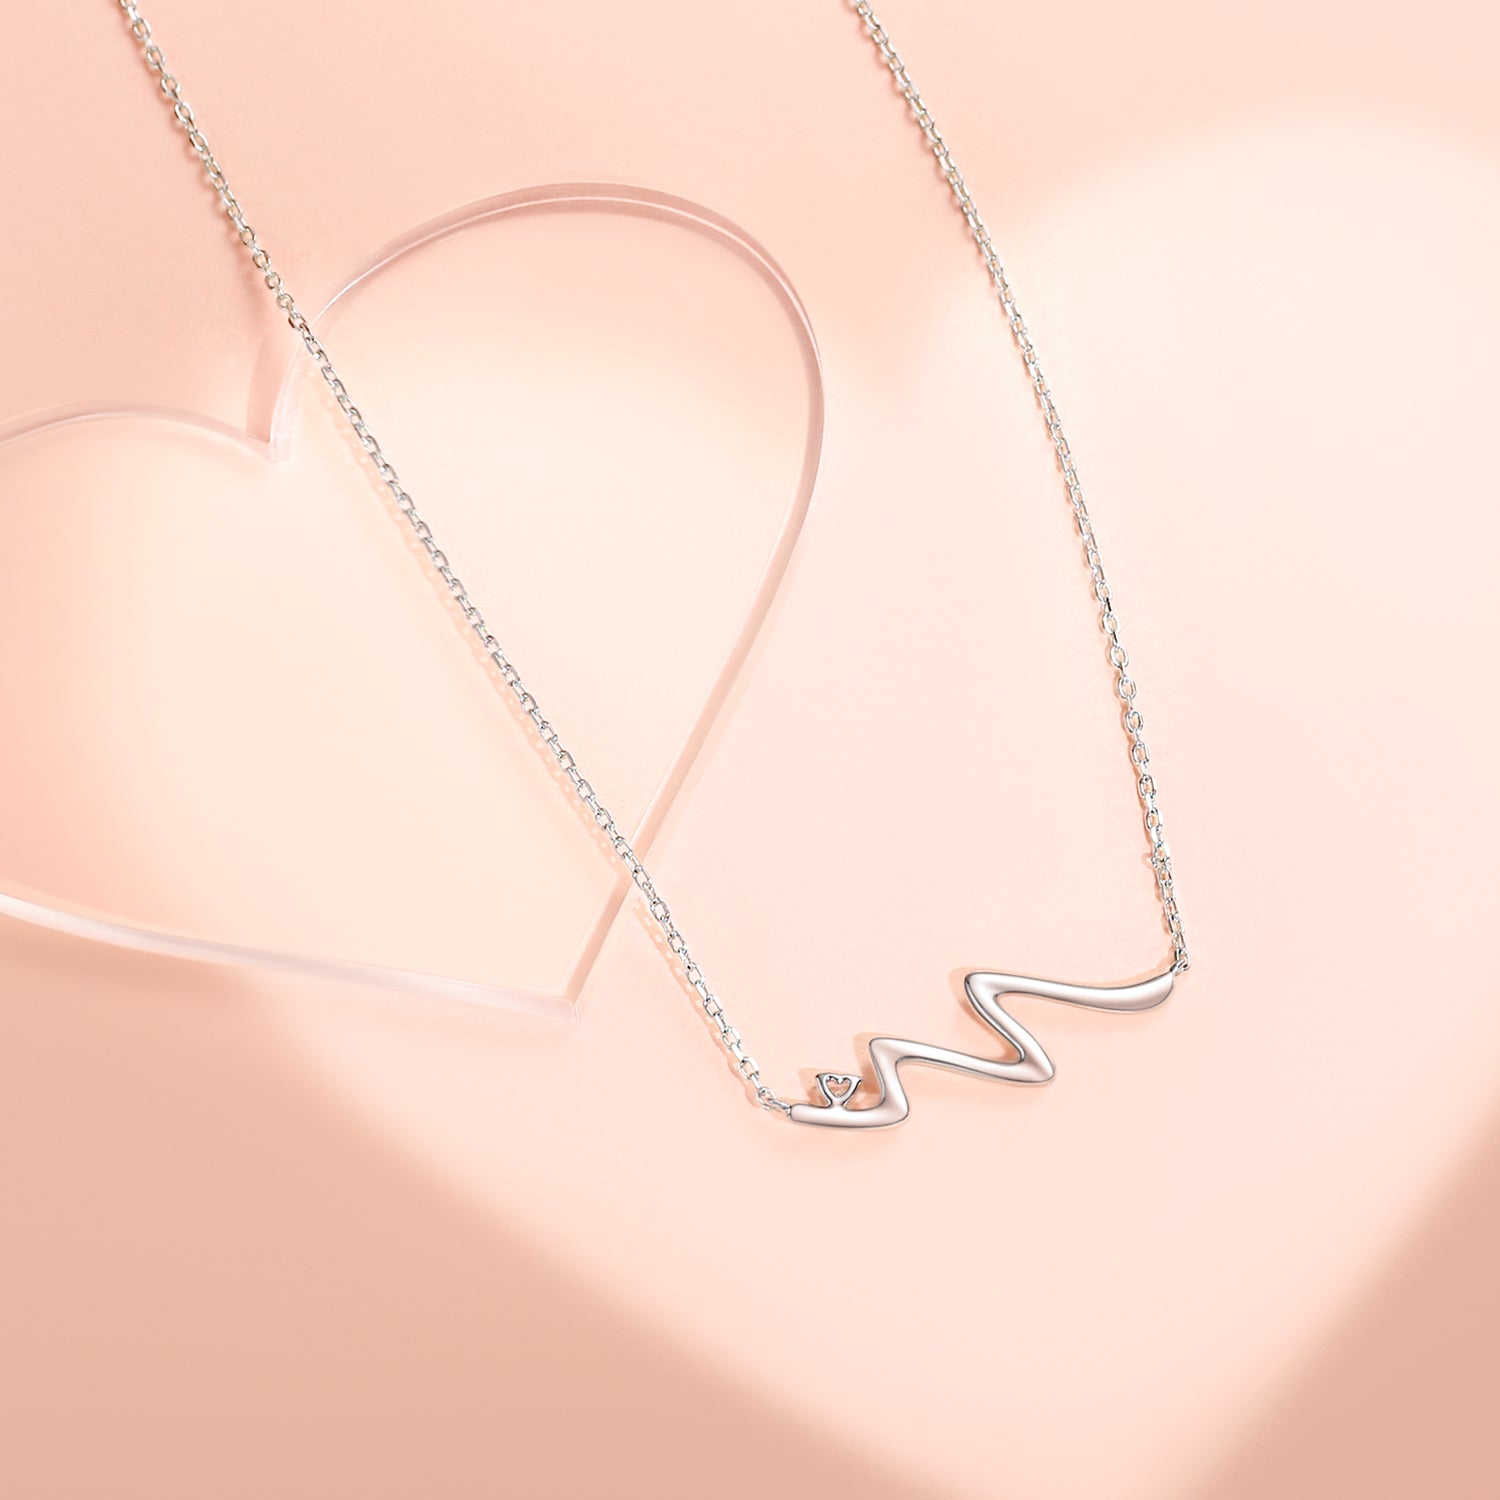 FANCIME “Dazzling Wink” Heart Wave Sterling Silver Necklace Detail2